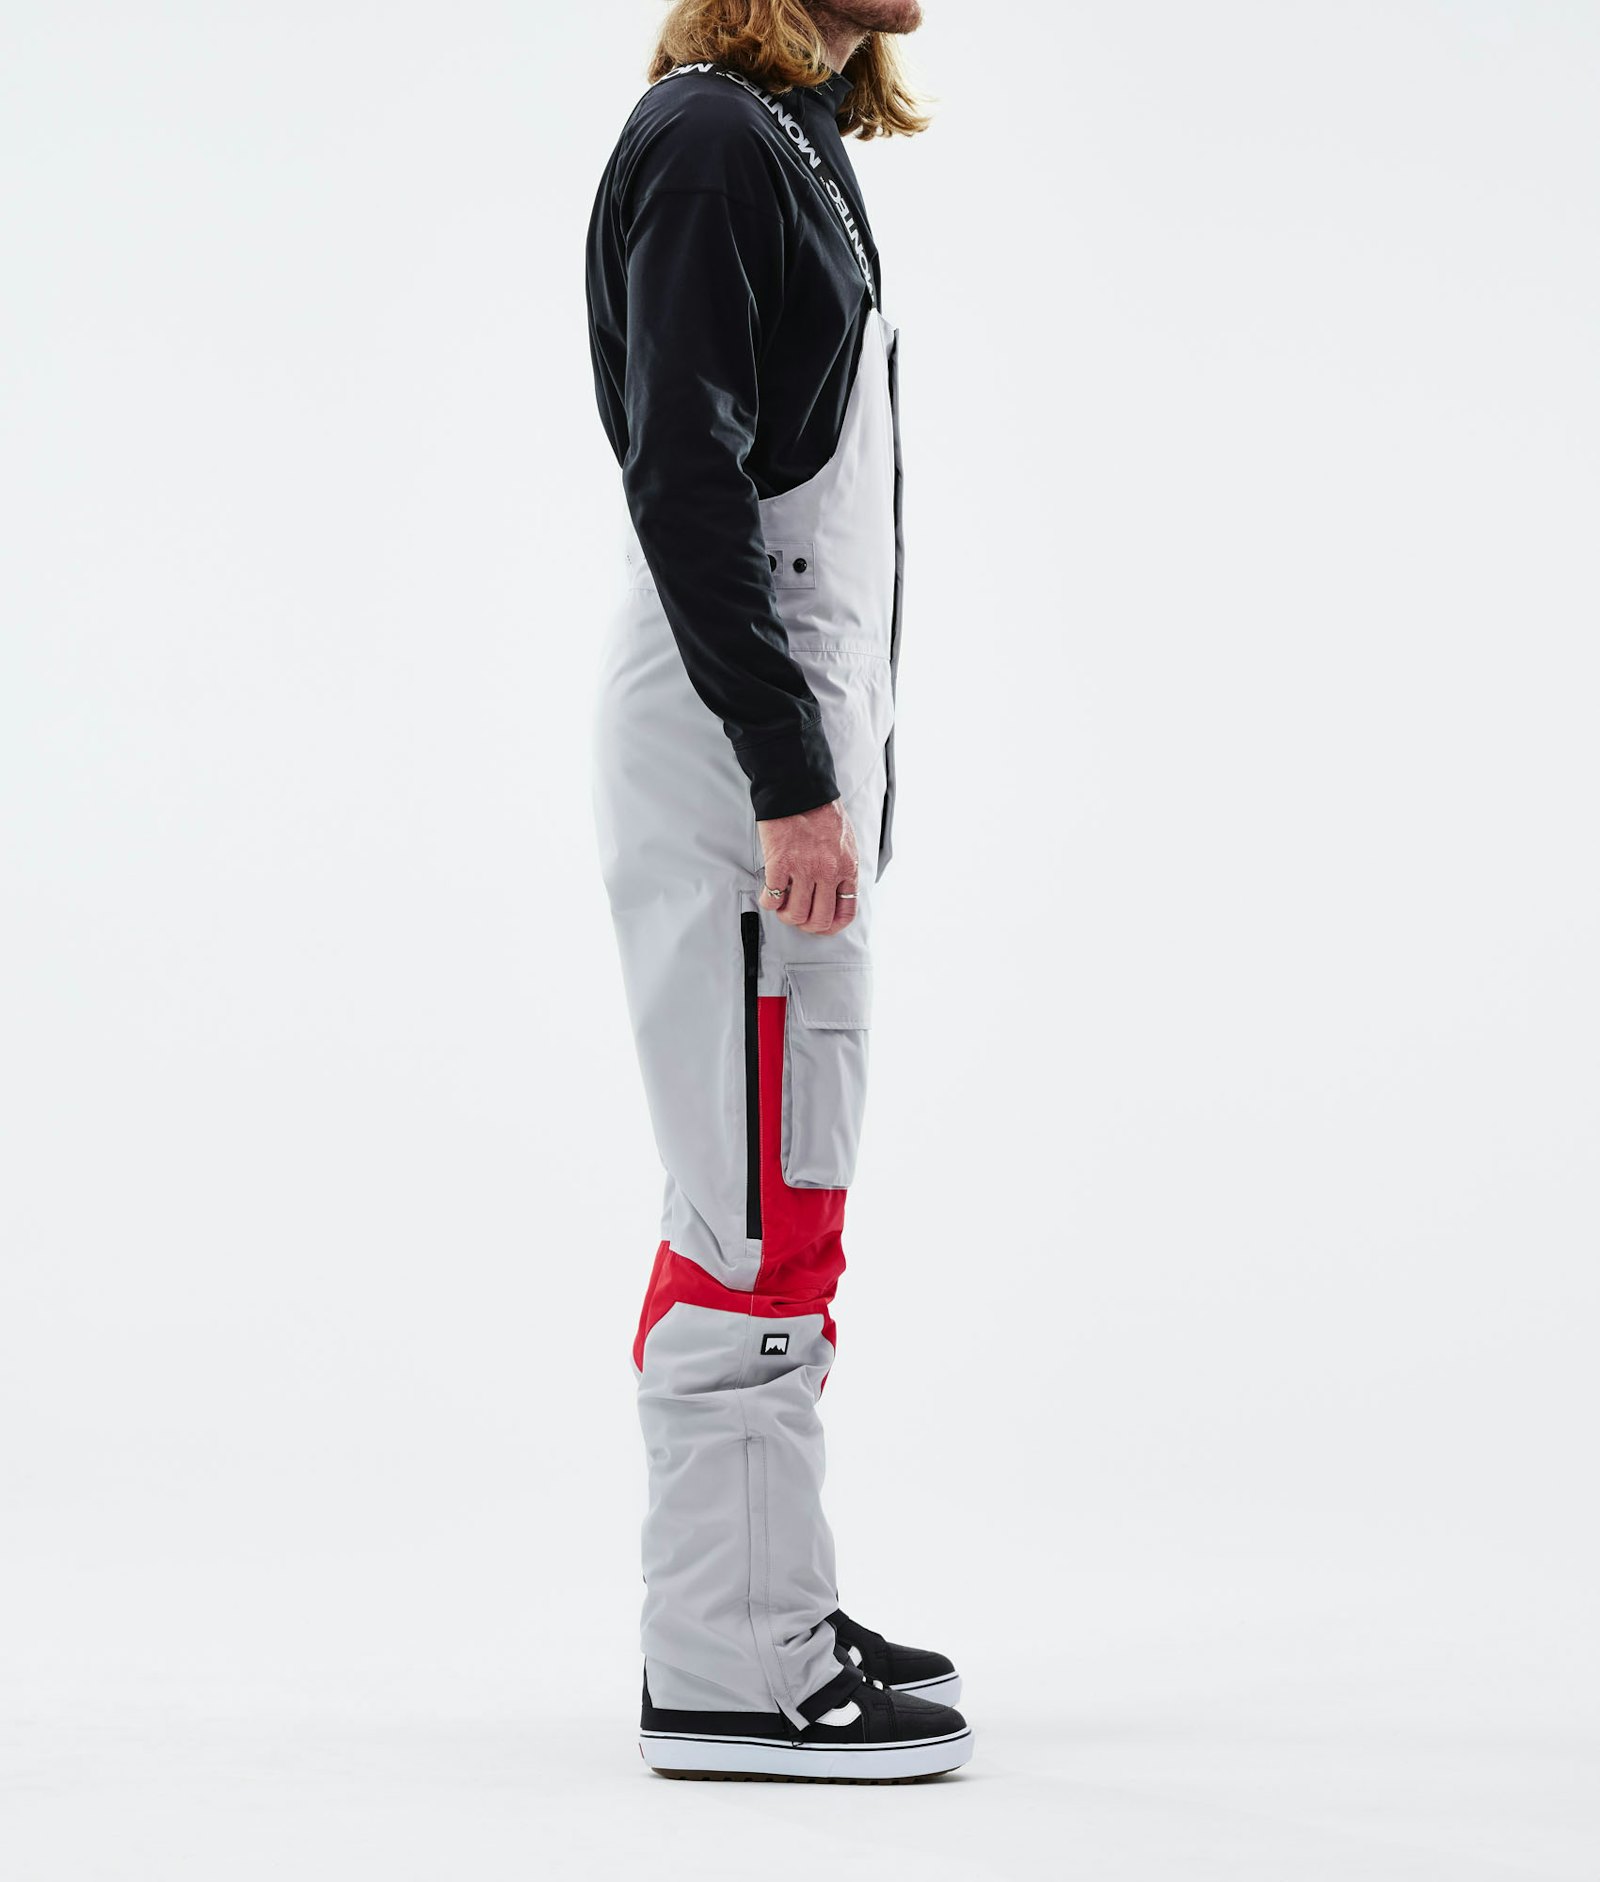 Fawk 2021 Pantalon de Snowboard Homme Light Grey/Red